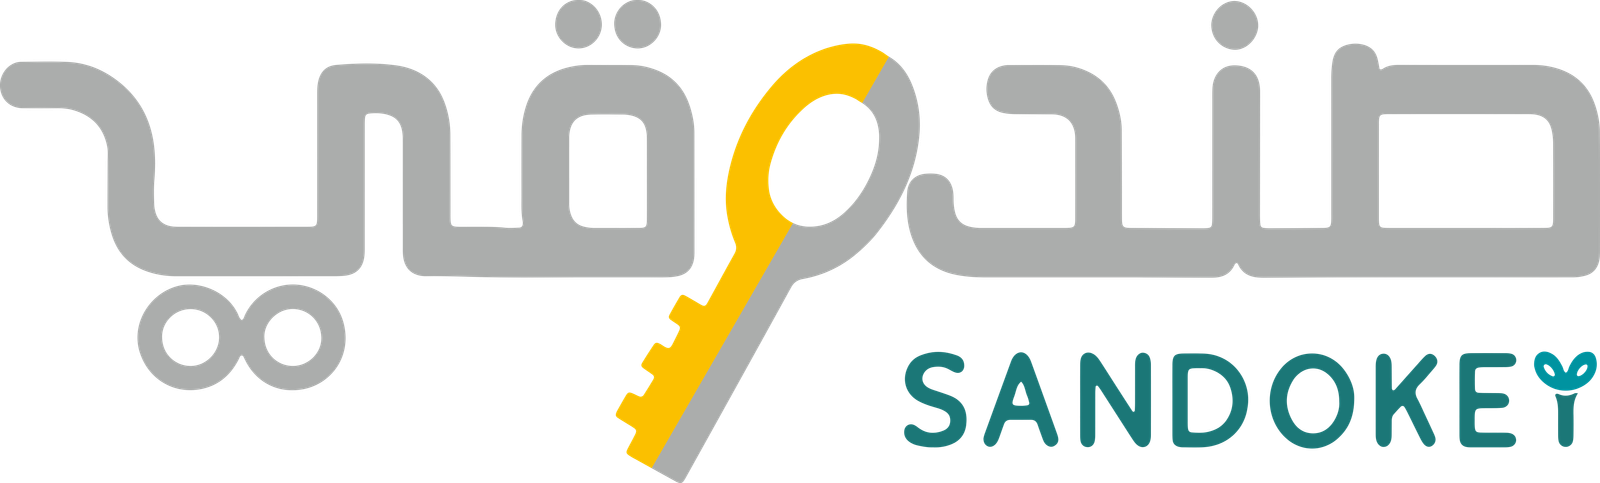 Sandokey logo